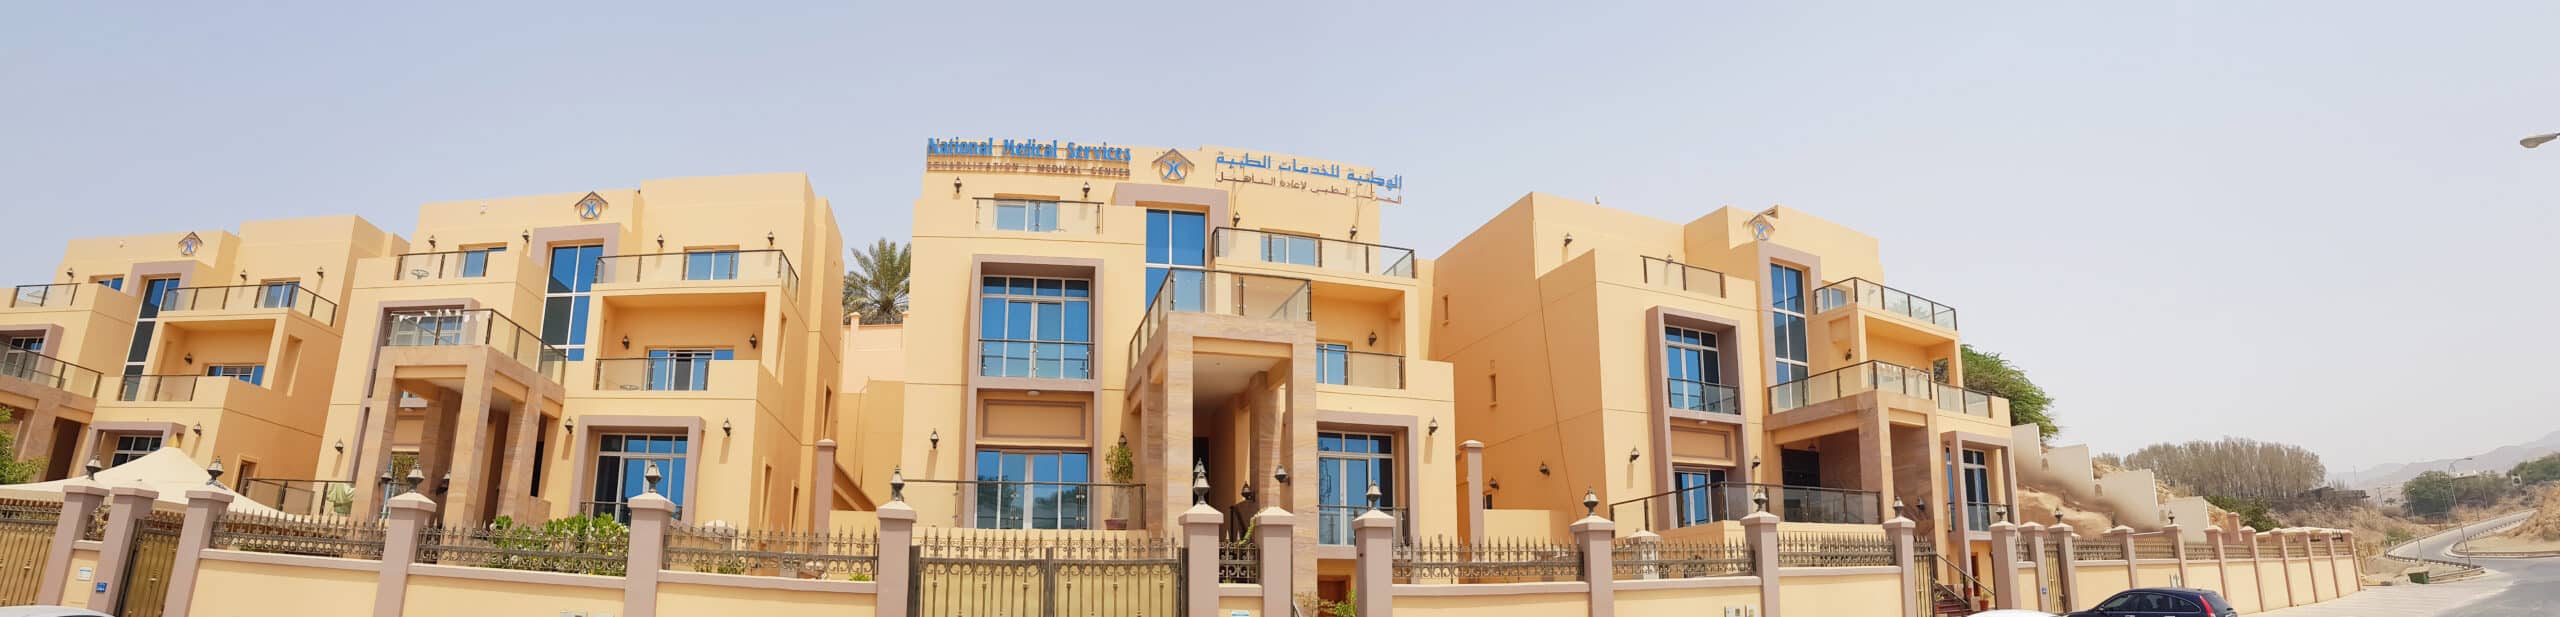 Emirates Hospitals REHAB - Muscat